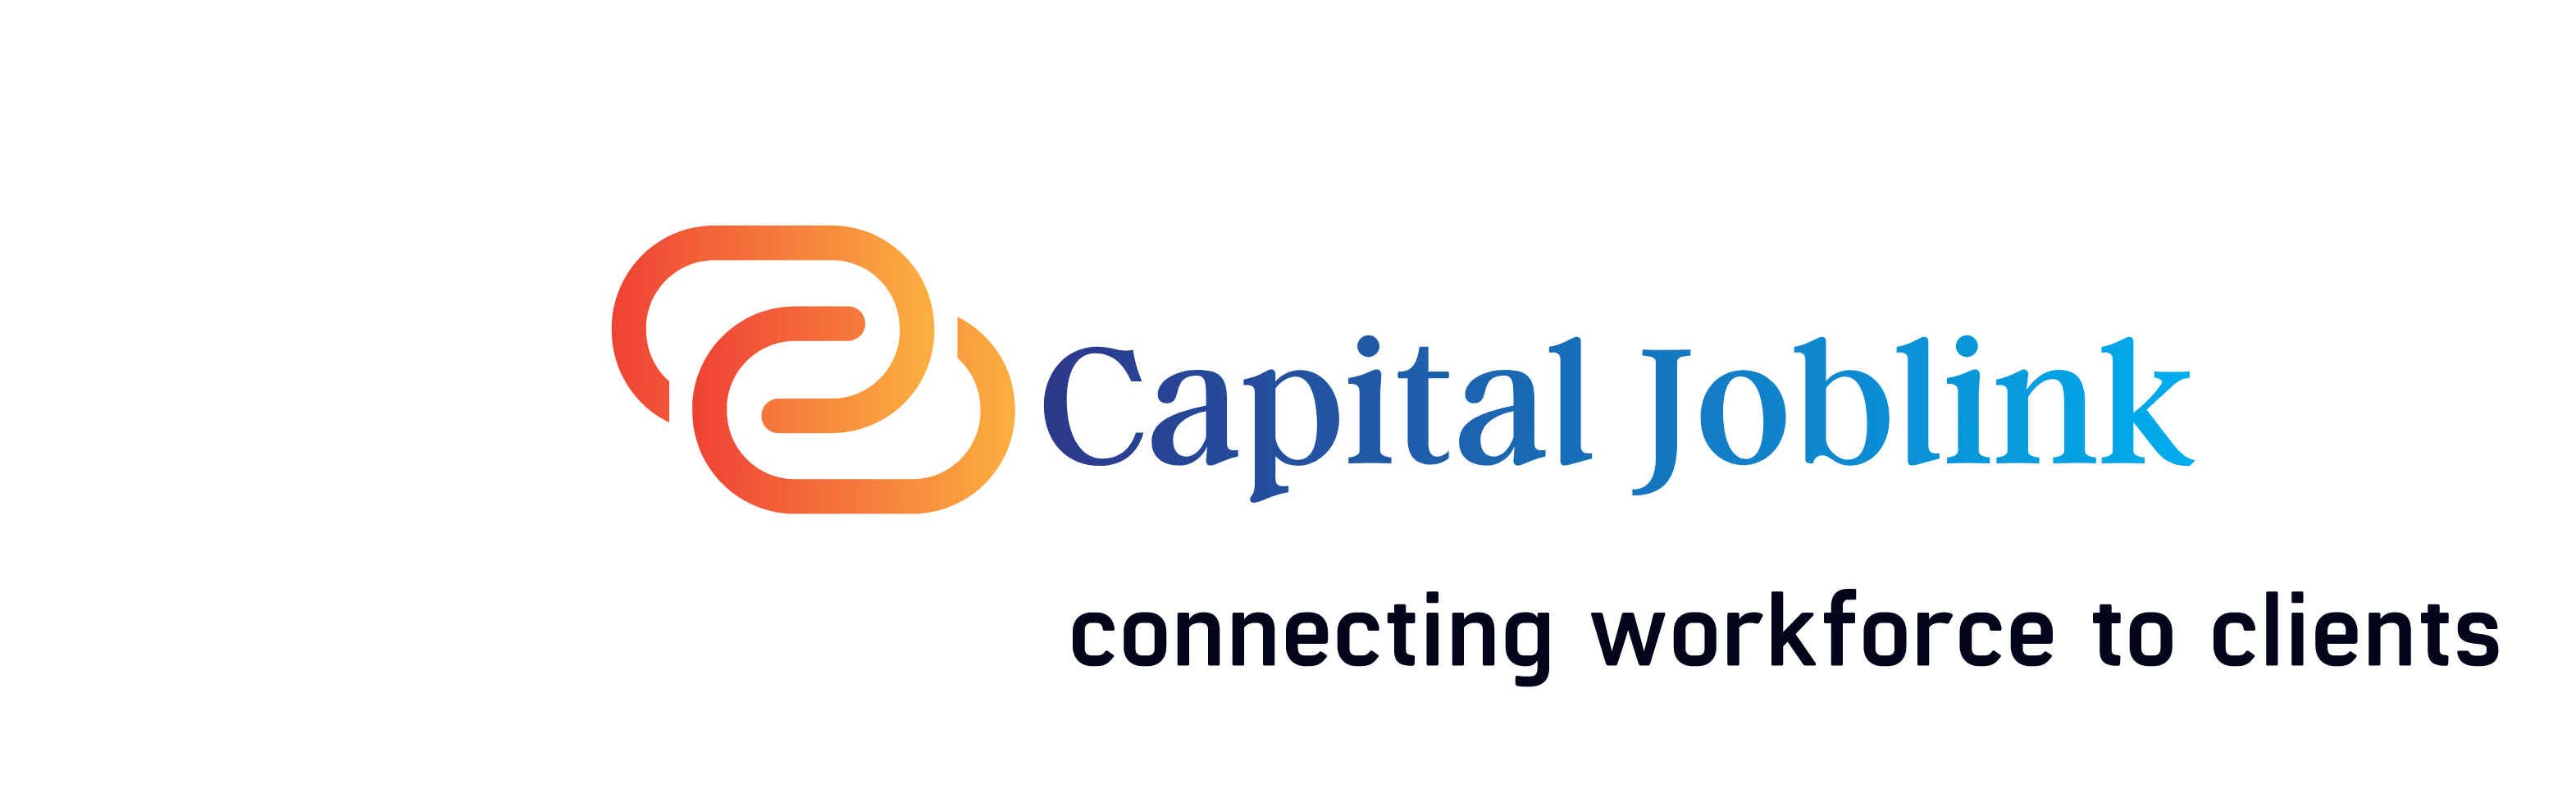 Capital Joblink